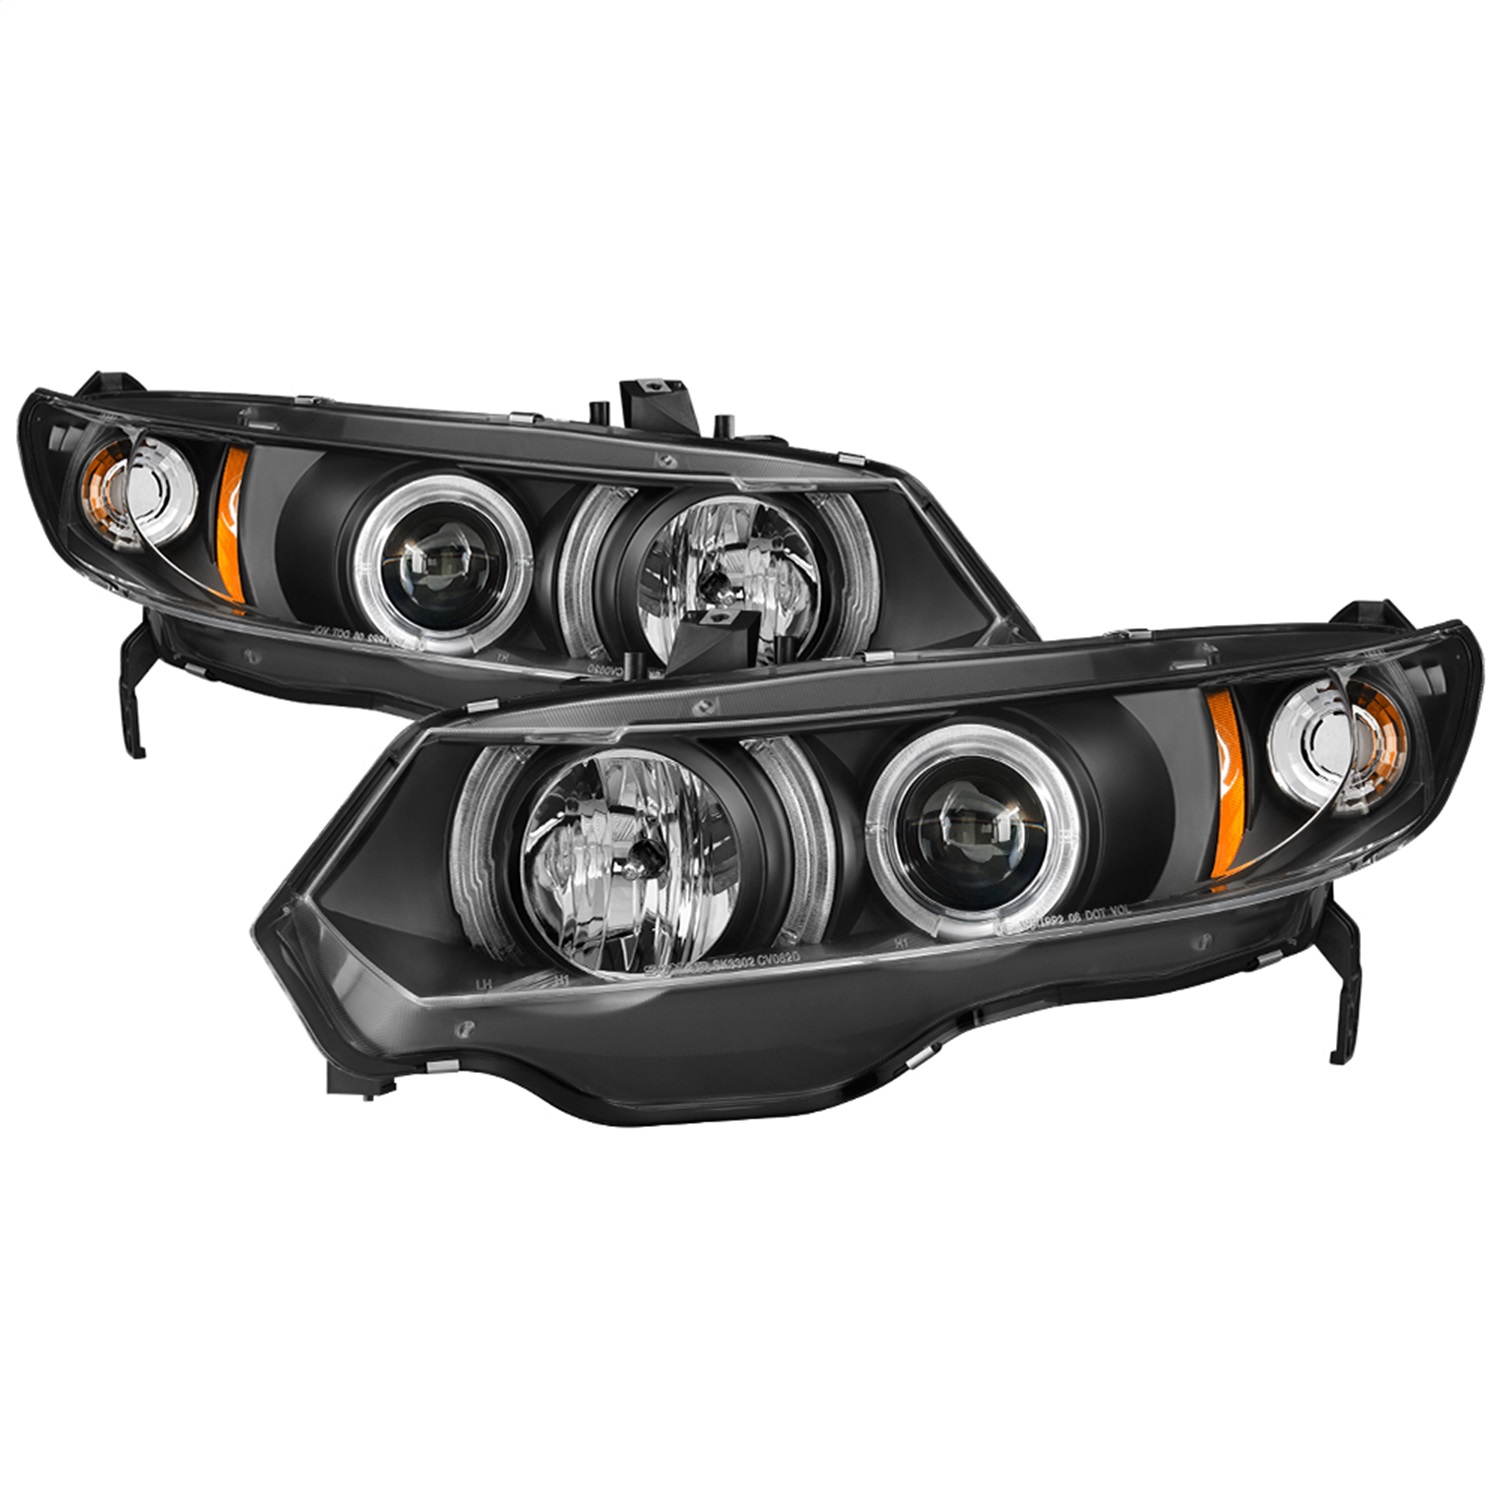 Spyder Auto 5010780 Halo Projector Headlights Fits 06-08 Civic